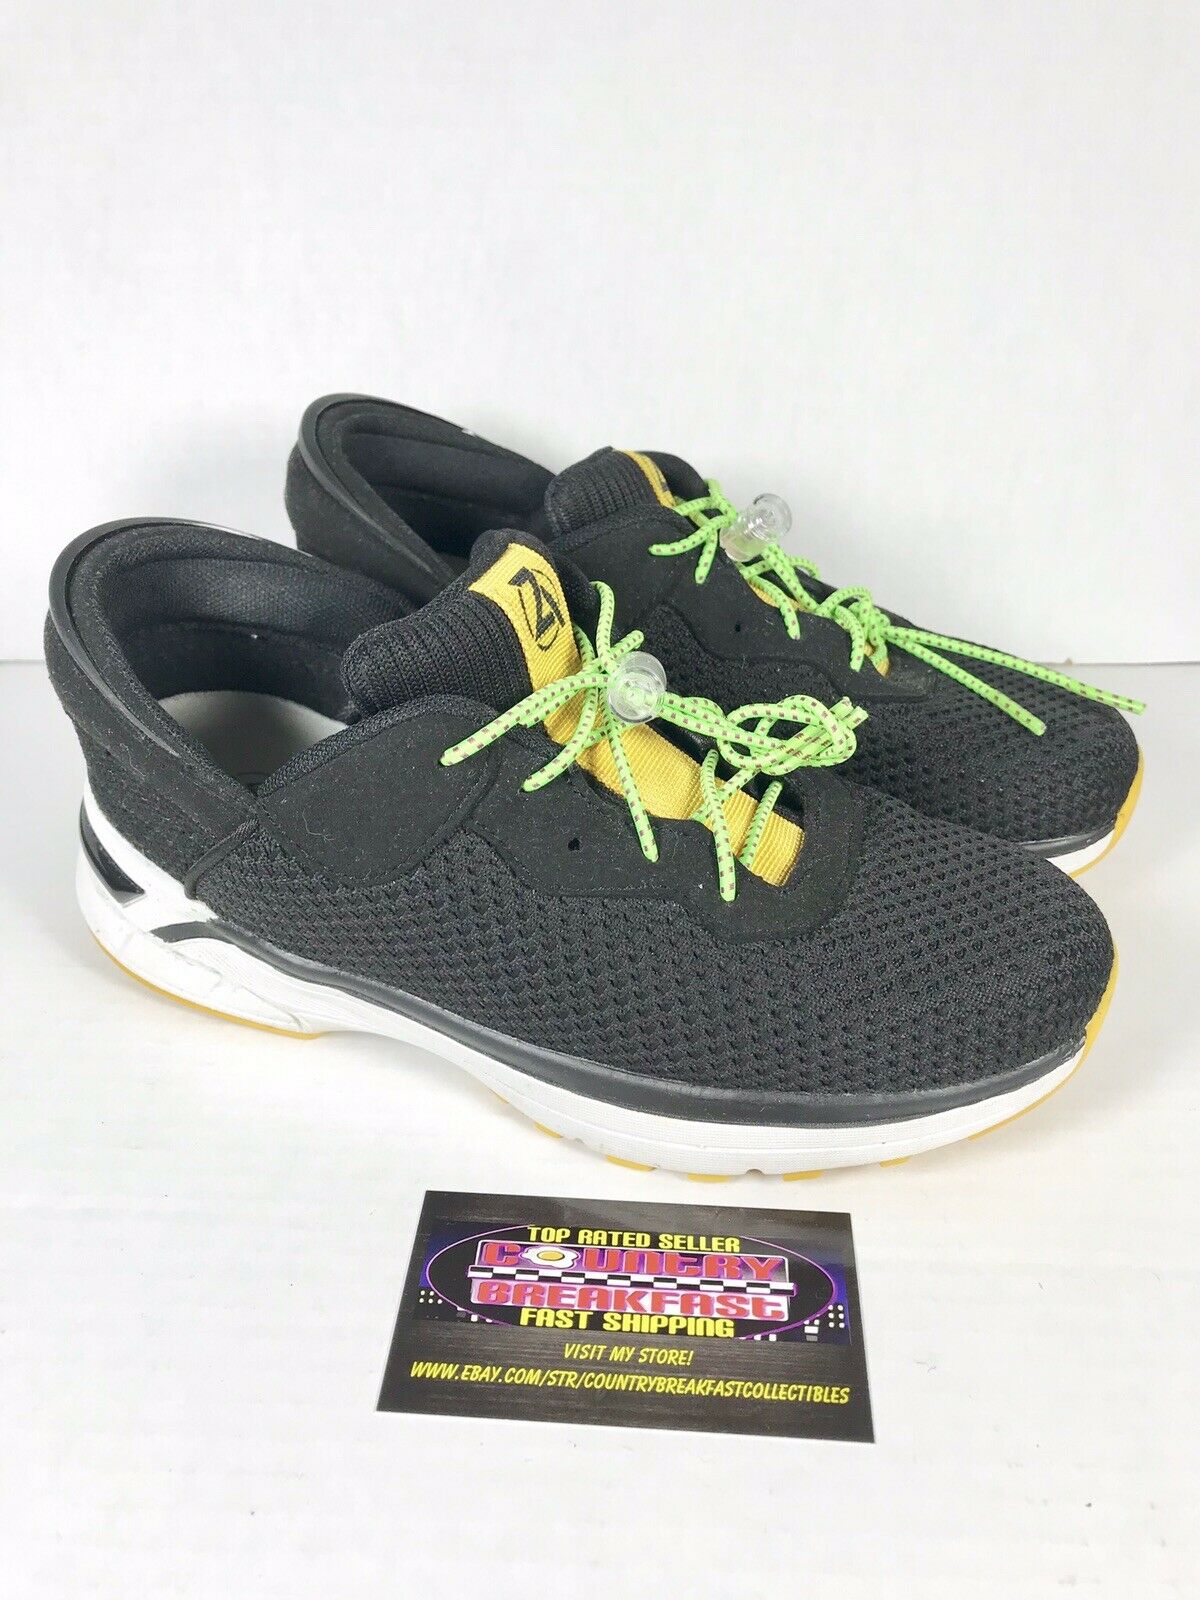 Zeba Hands Free Electric Black Athletic Sneaker Shoes Slip On Size Women’s 7 US